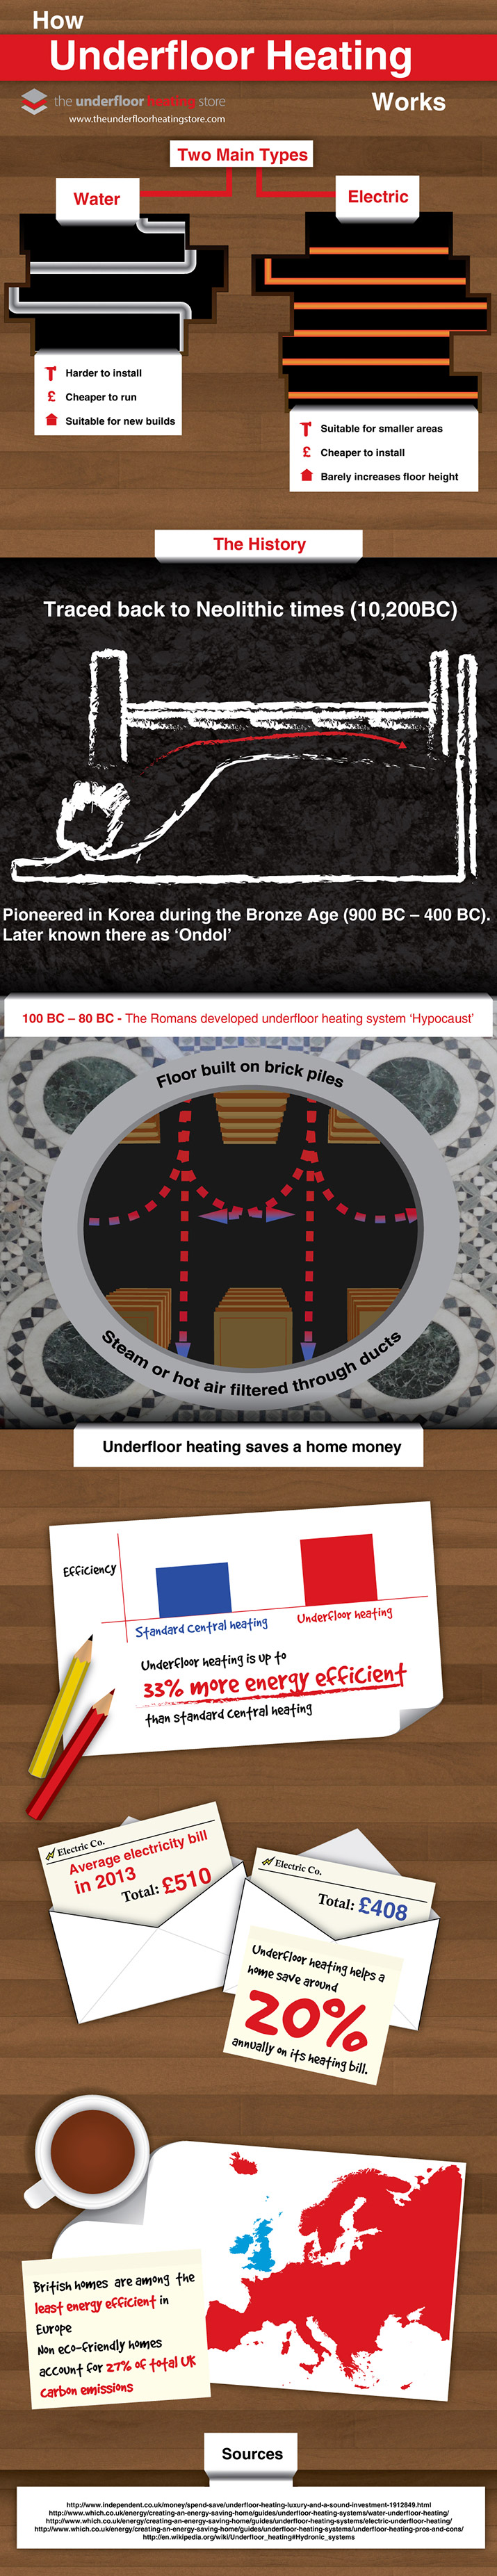 How Underfloor Heating Works Infographic